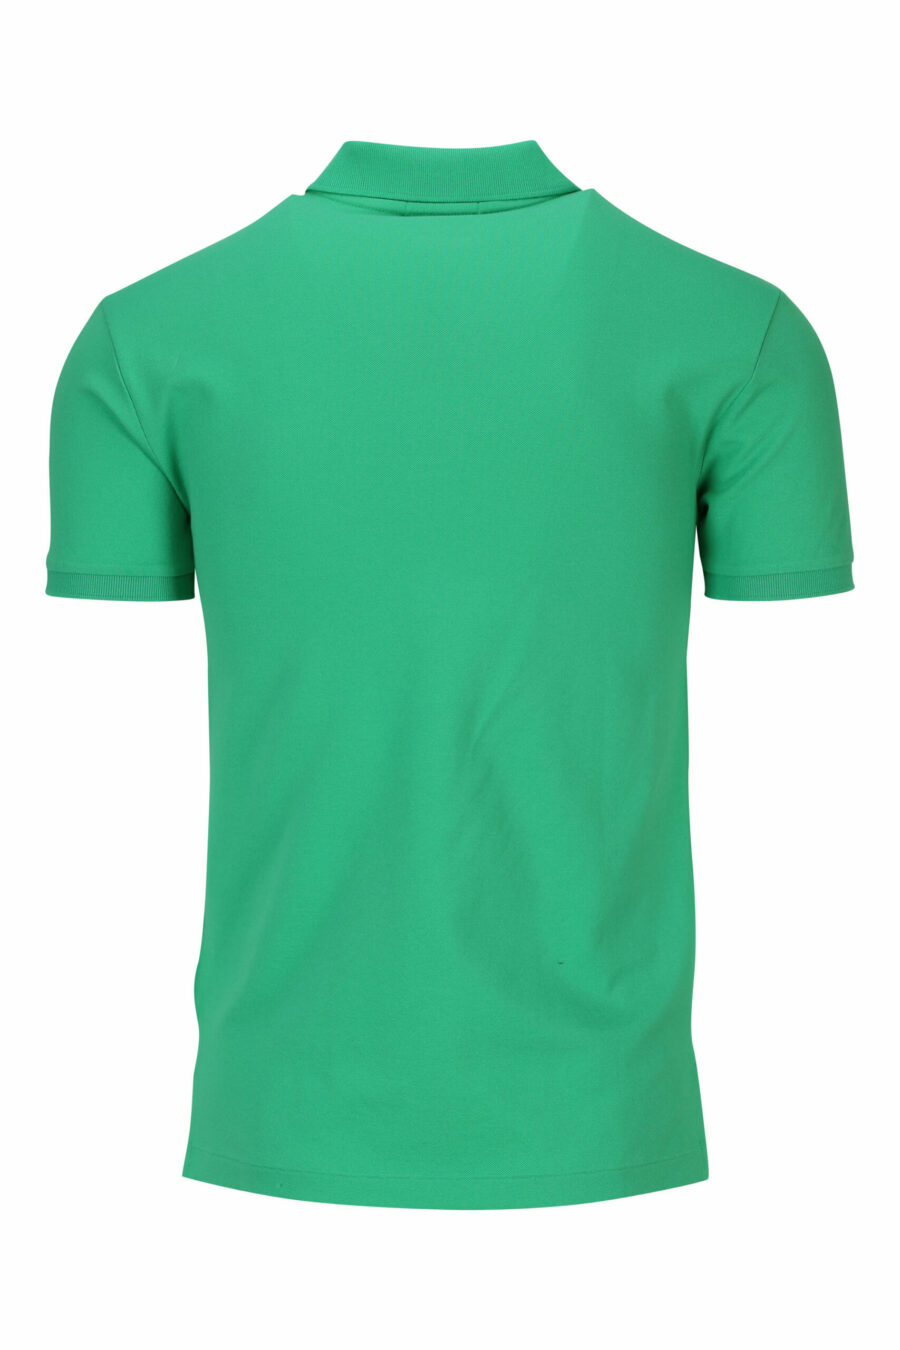 Camiseta verde y azul con minilogo "polo" - 3616535909687 1 scaled